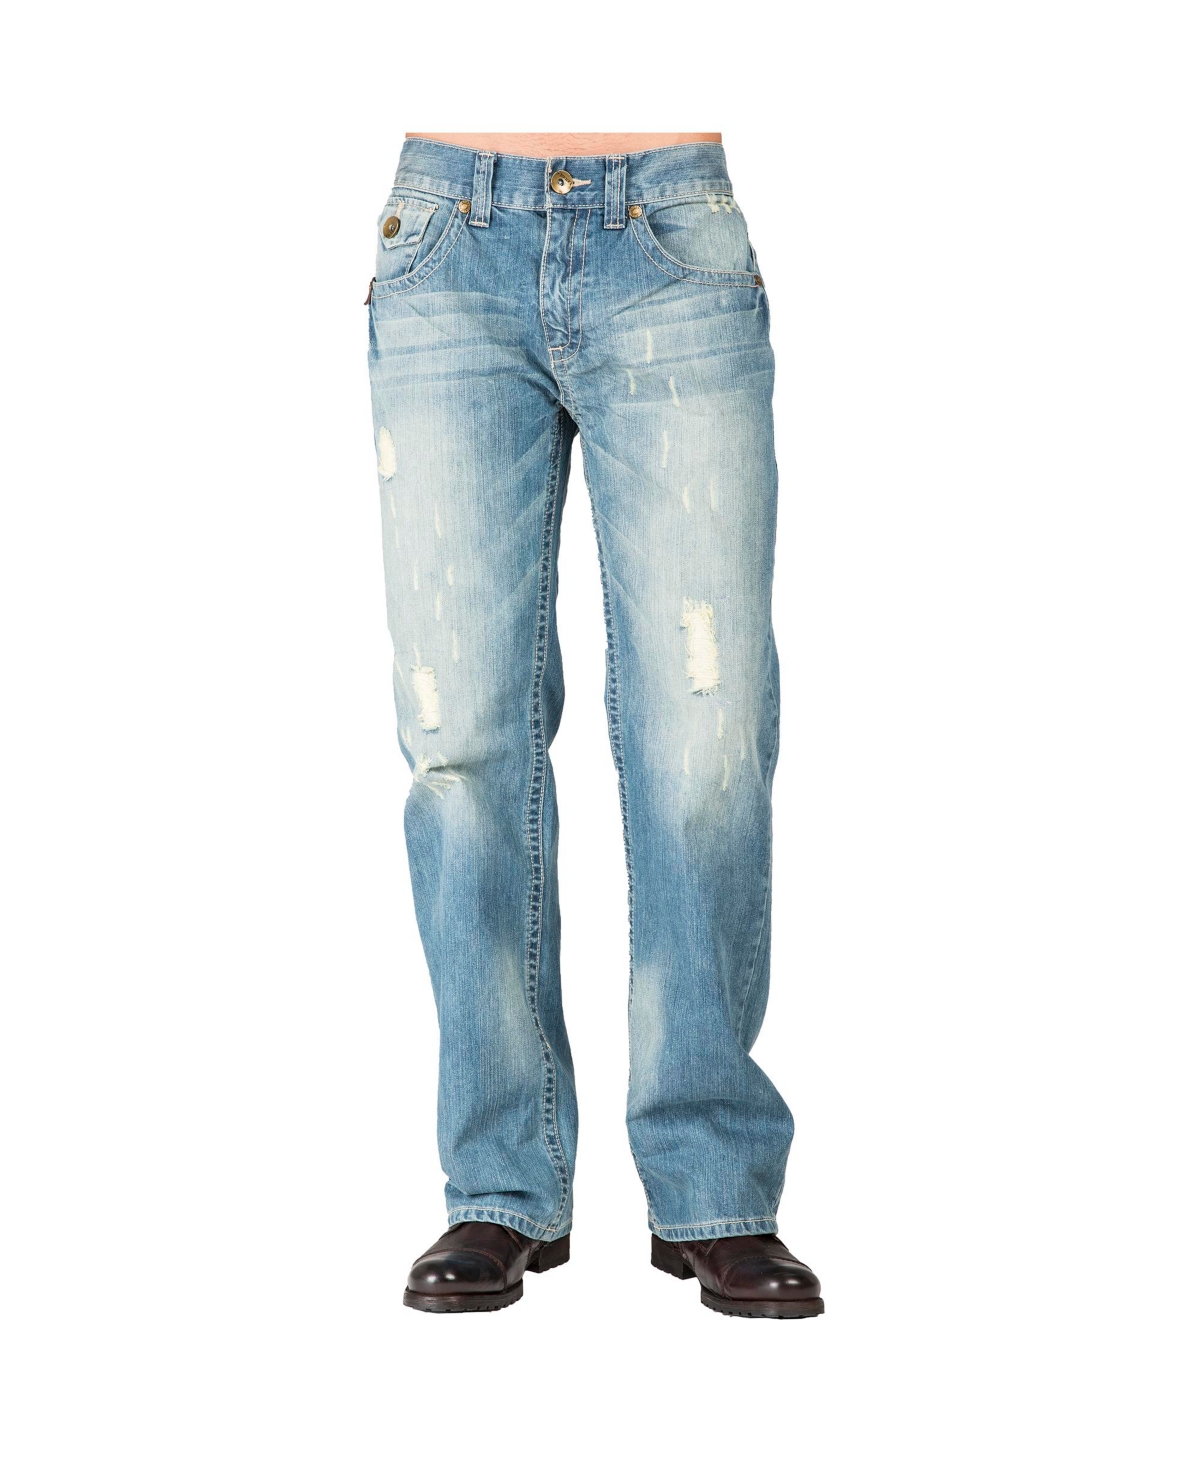 Men's Relaxed Straight Leg Premium Denim Jeans Zipper Trim Pockets - Light blue tint